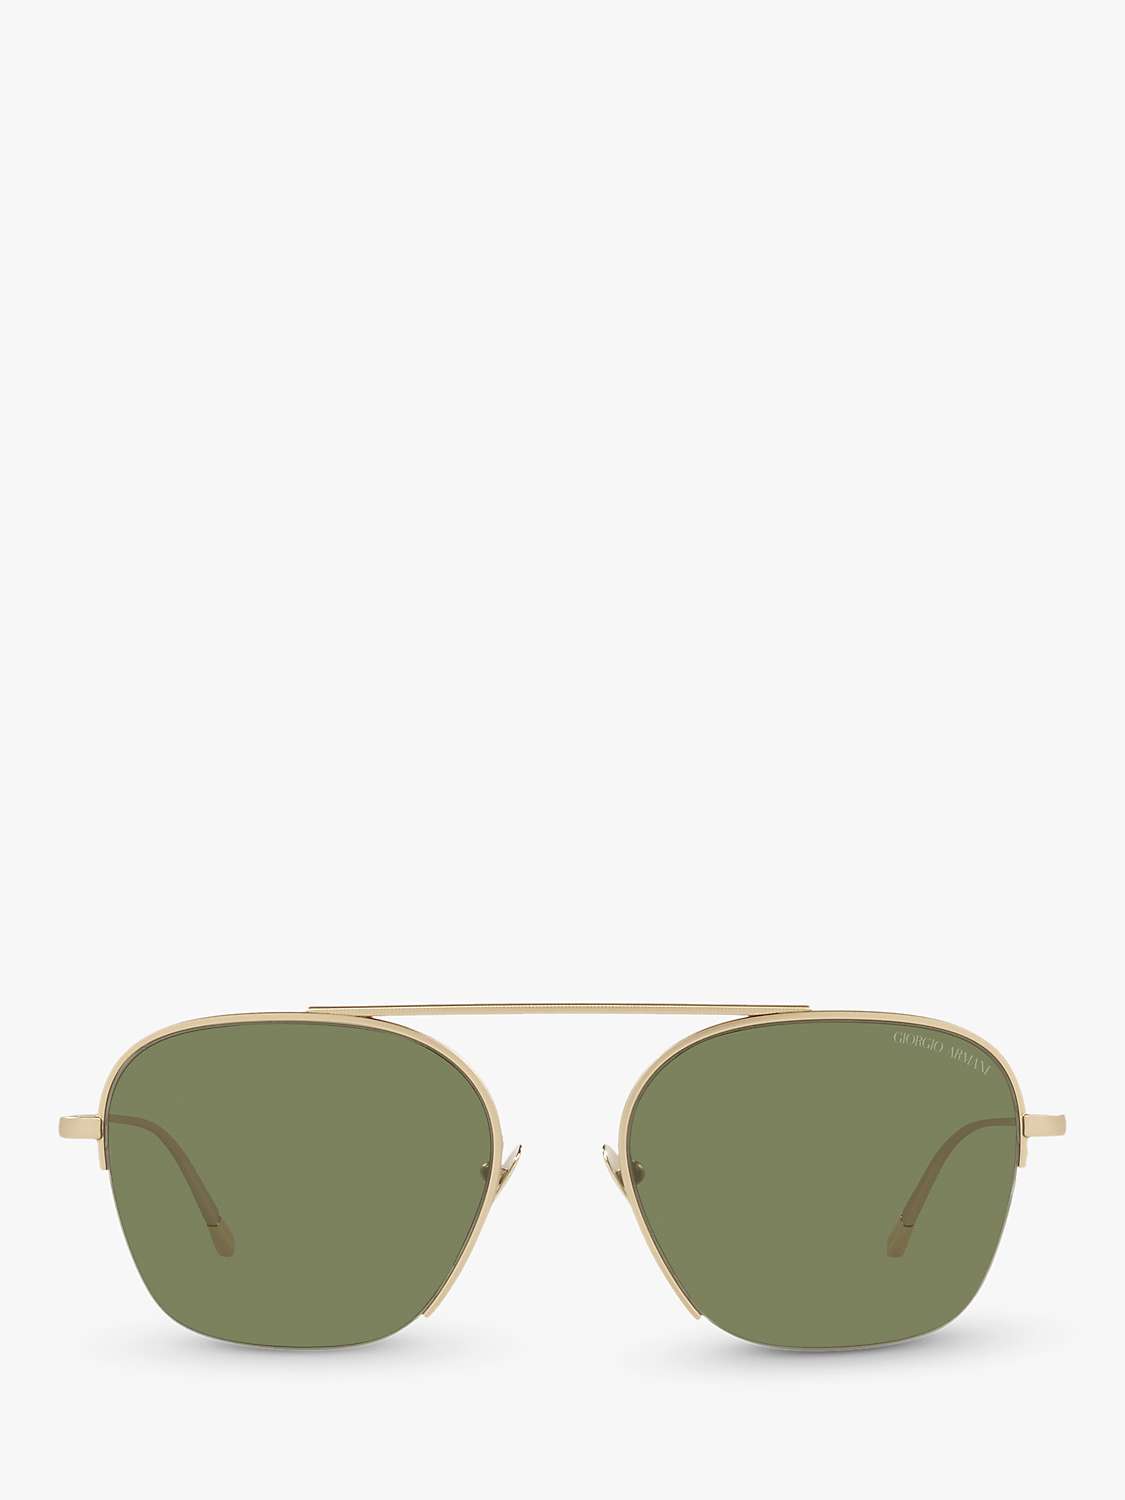 Buy Emporio Armani AR612430 Men's Square Sunglasses, Matte Pale Gold/Green Online at johnlewis.com